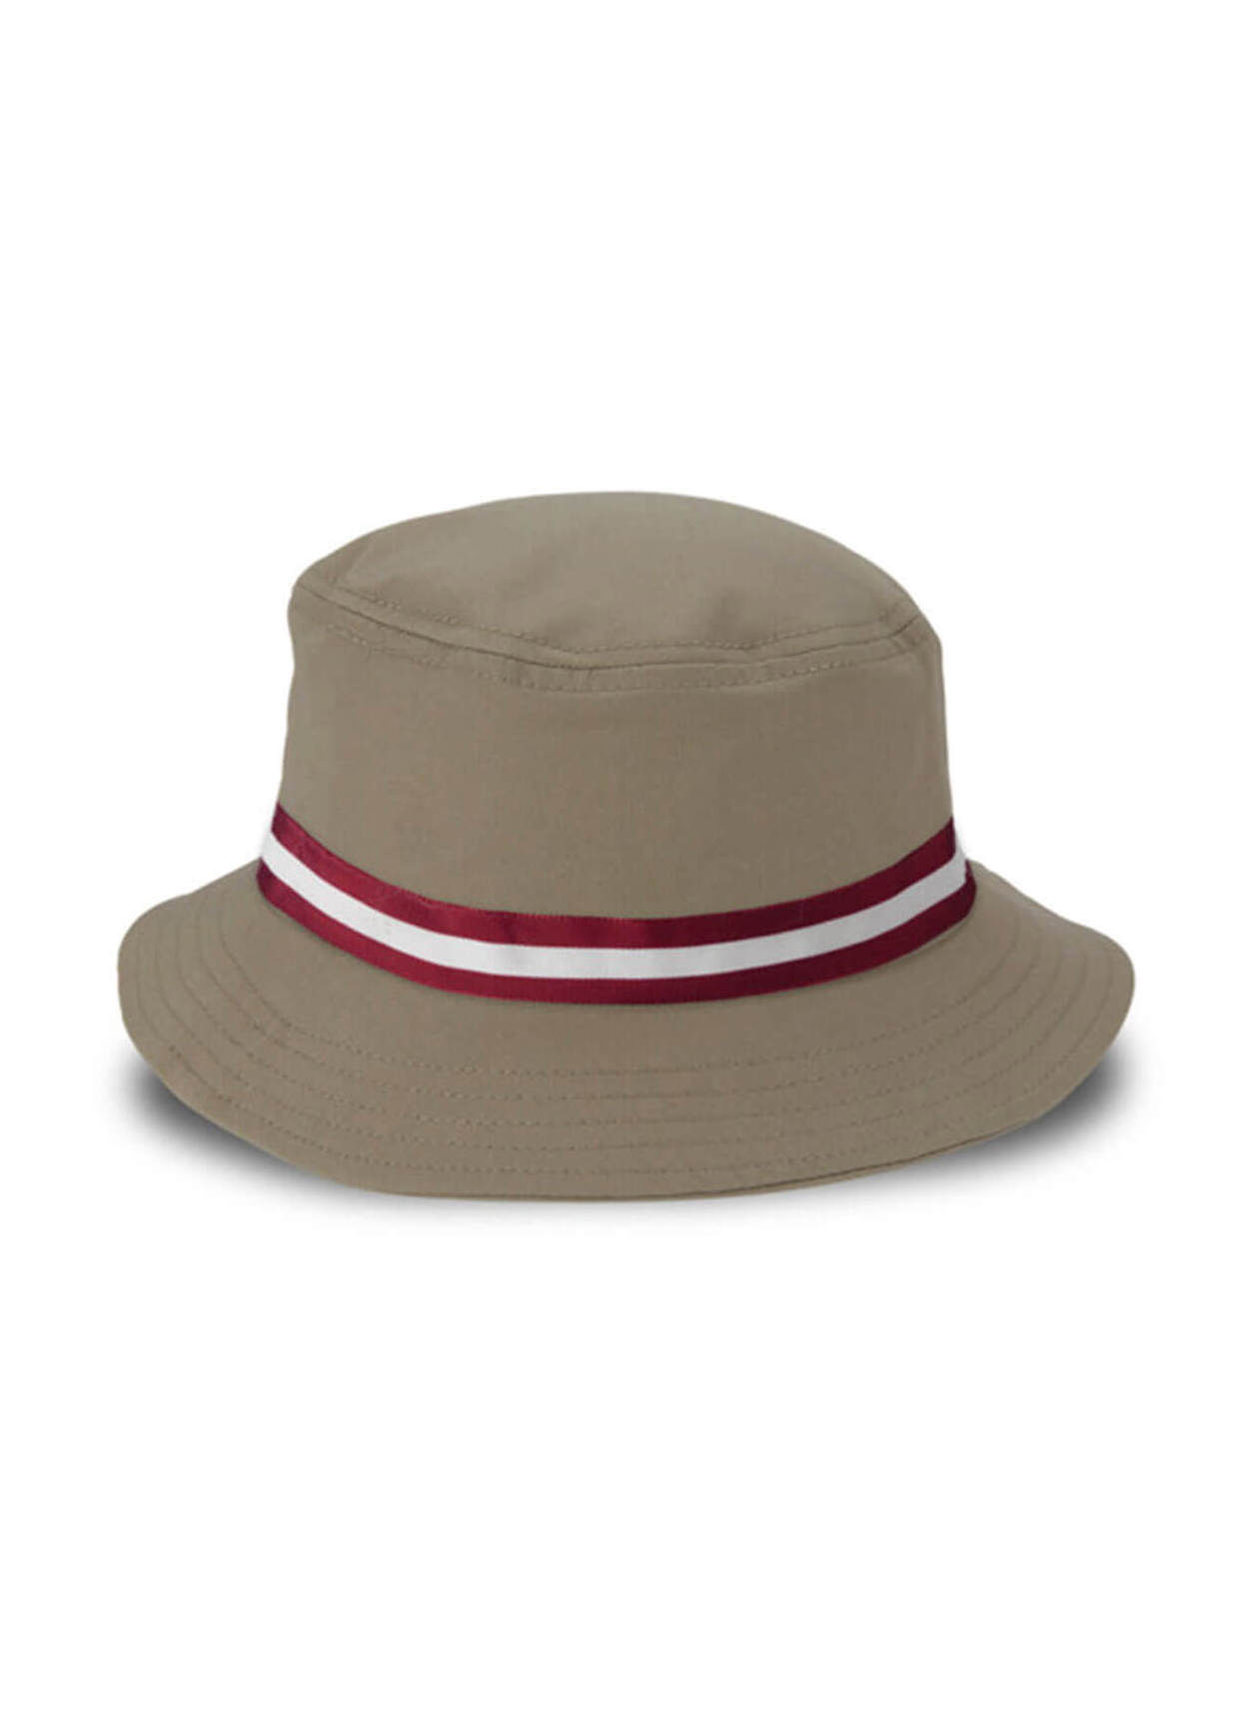 Imperial Khaki / Maroon The Oxford Bucket Hat